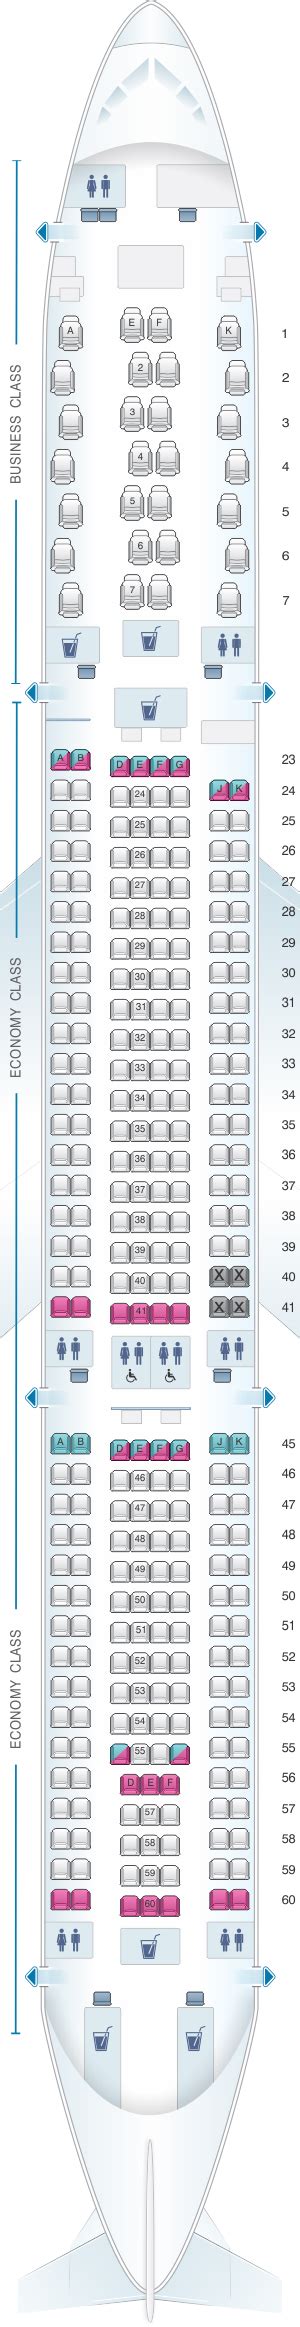 Qantas Seat Maps A330